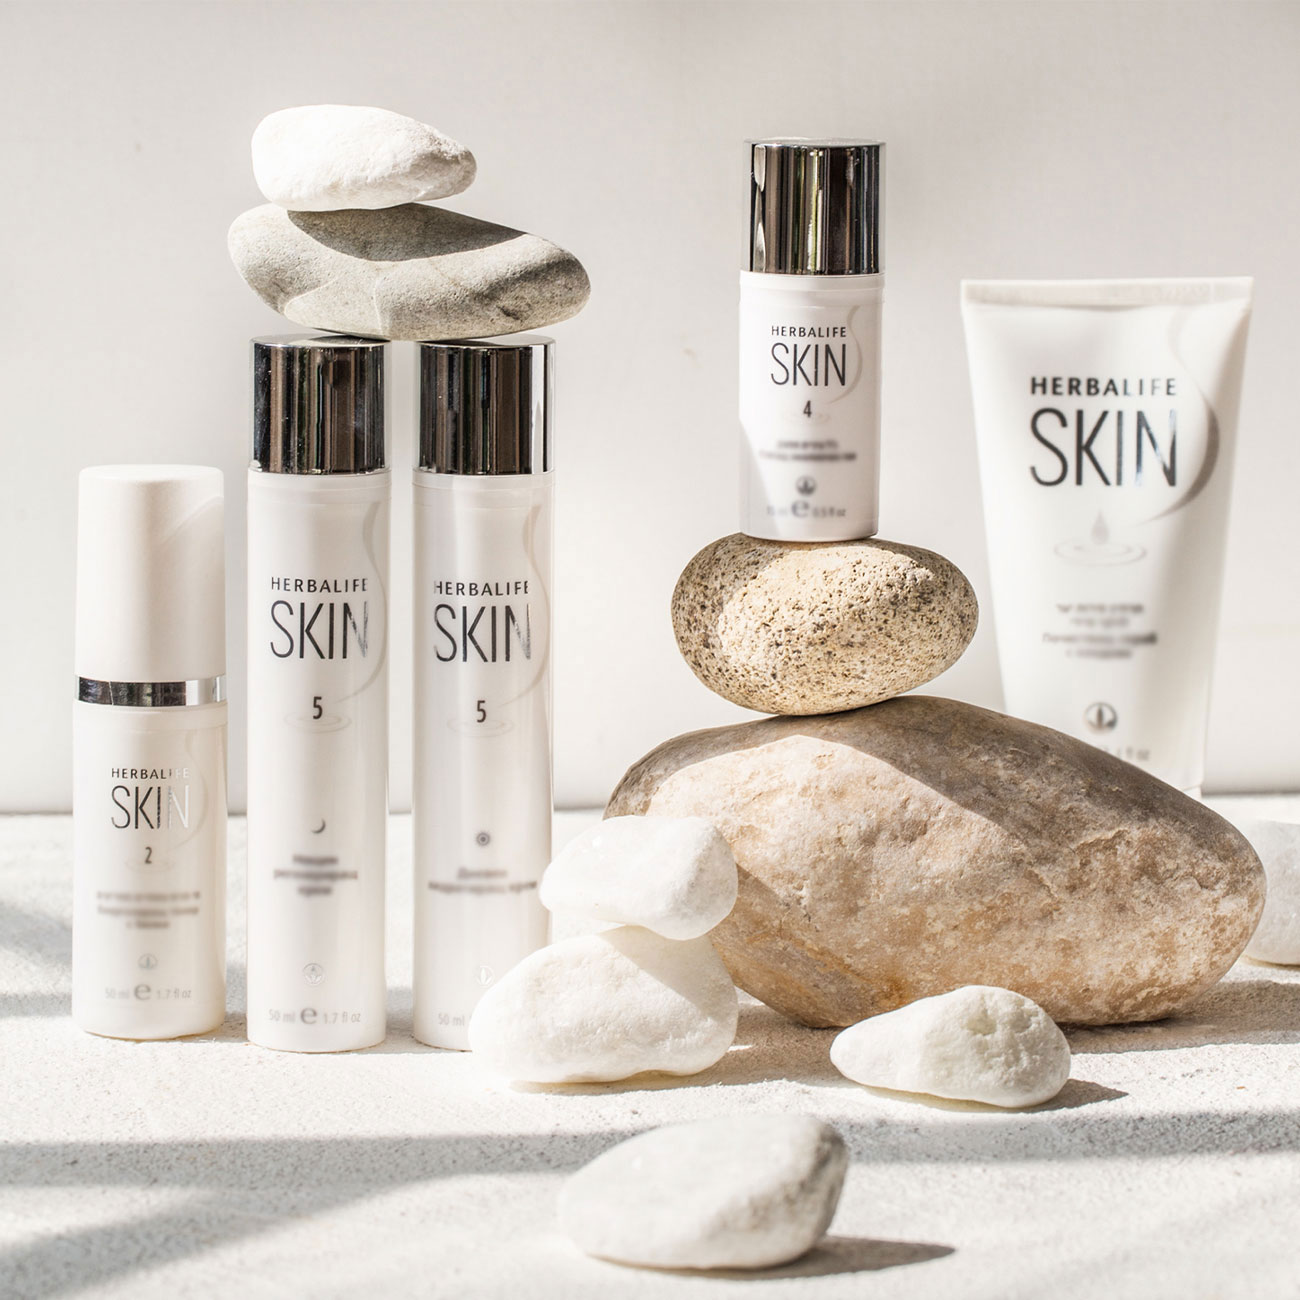 Herbalife SKIN range - skincare products formulated with key vitamins